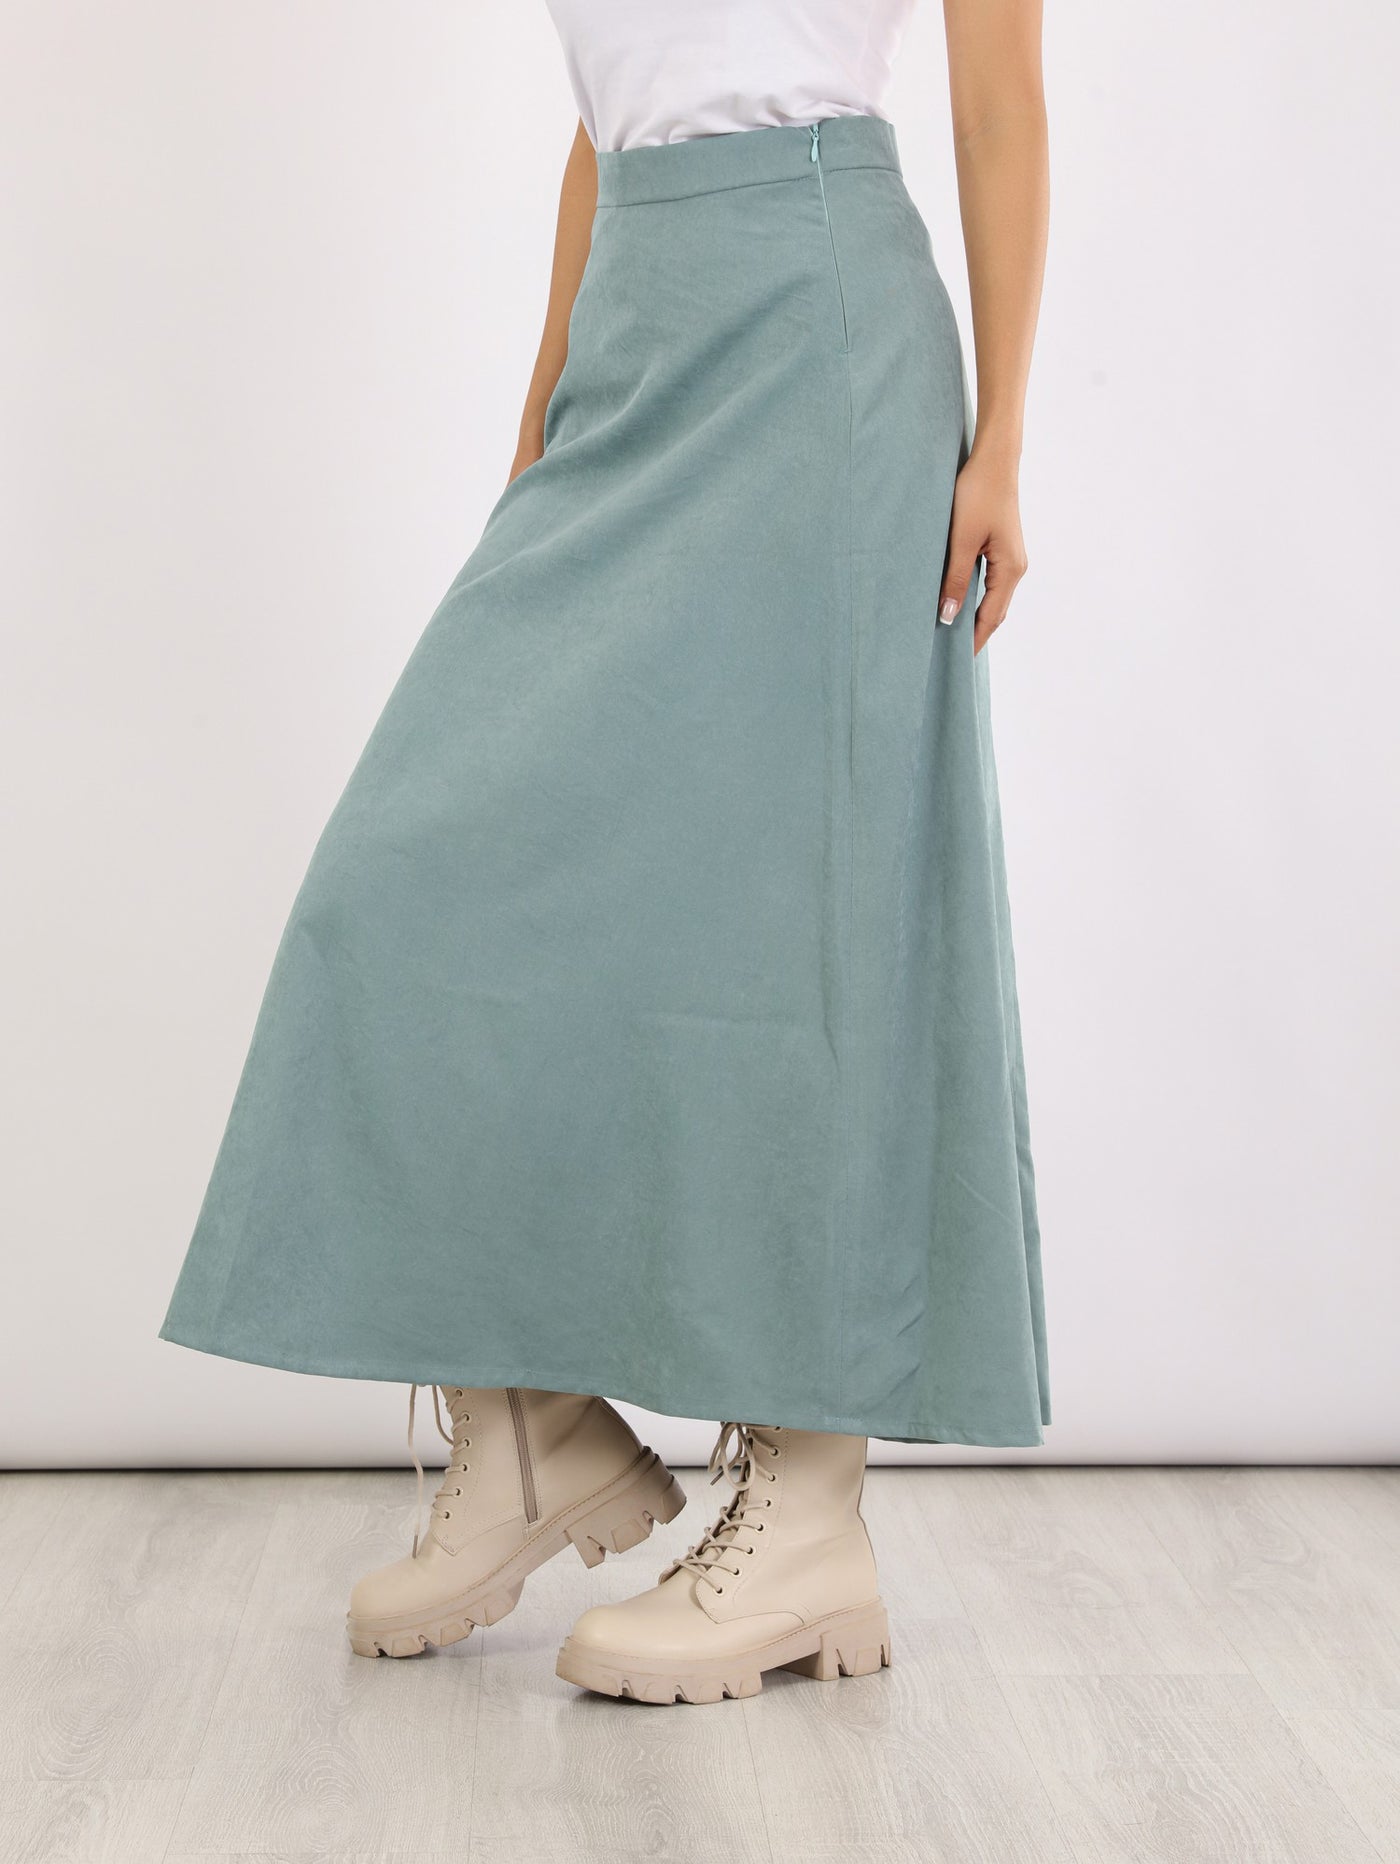 Skirt - A-Line - Plain